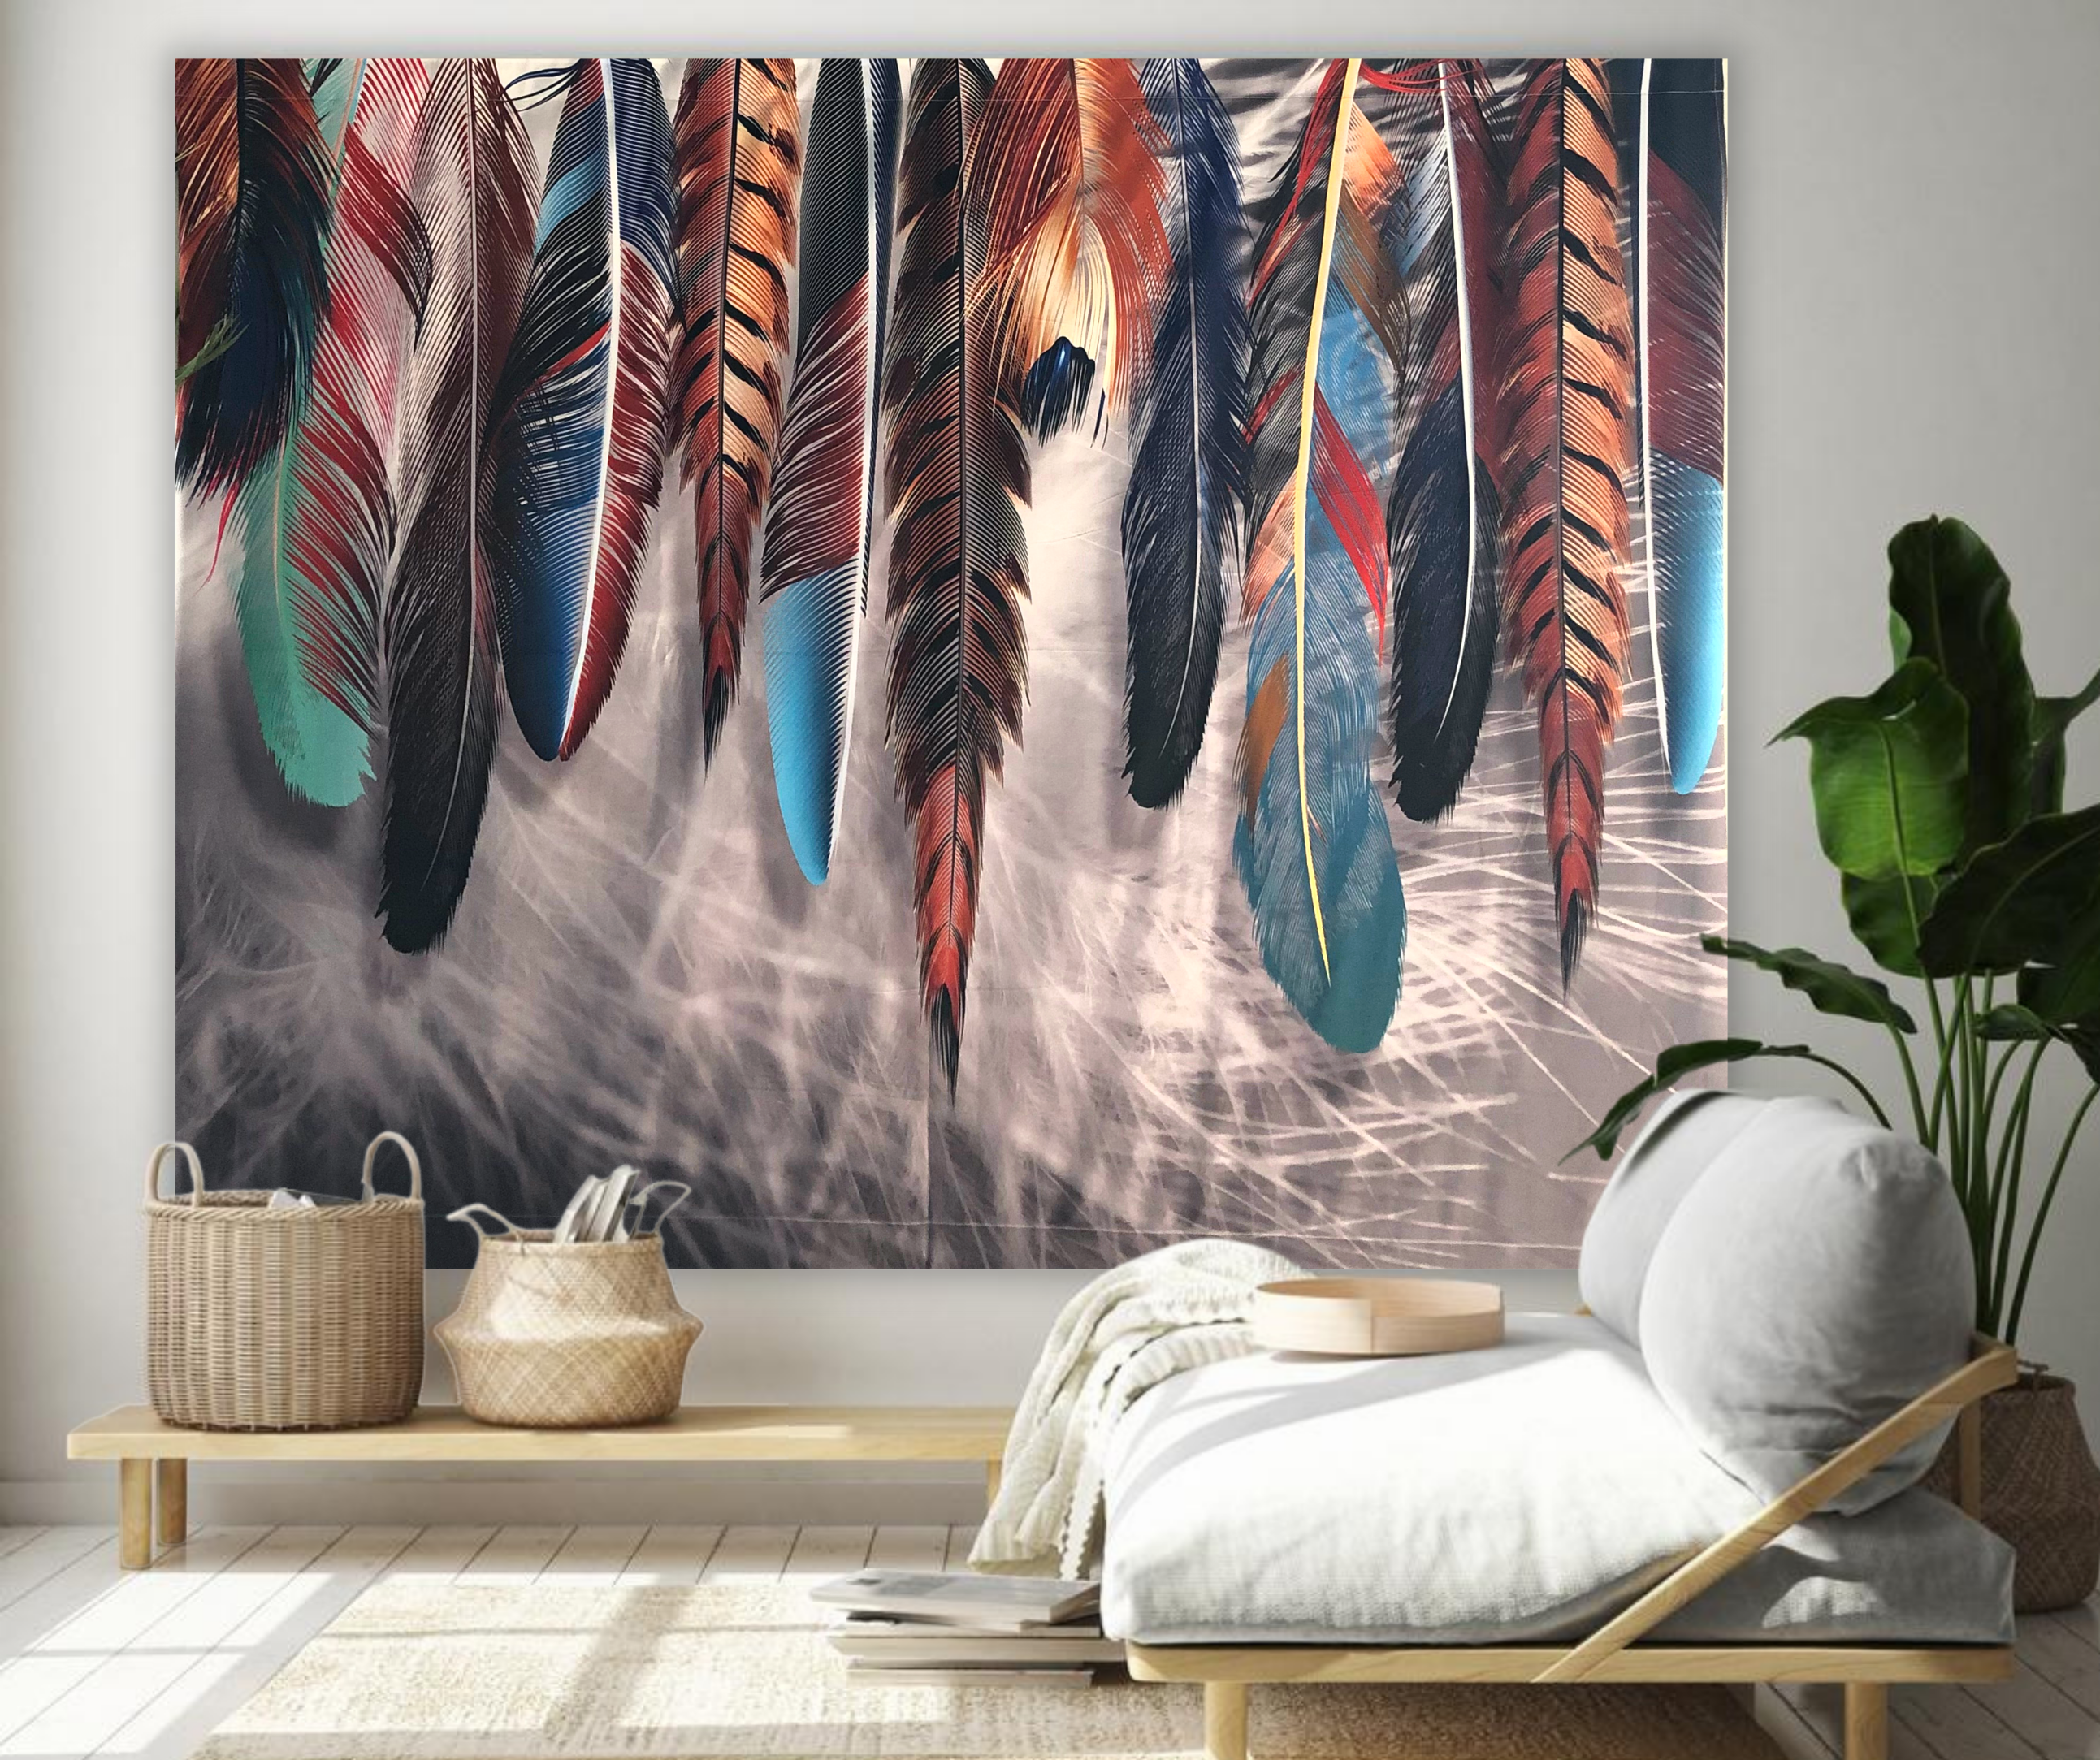 KaiSha LED Tapestry Wall Hanging; Modern Abstract Boho Art Bohemian Dream Catcher